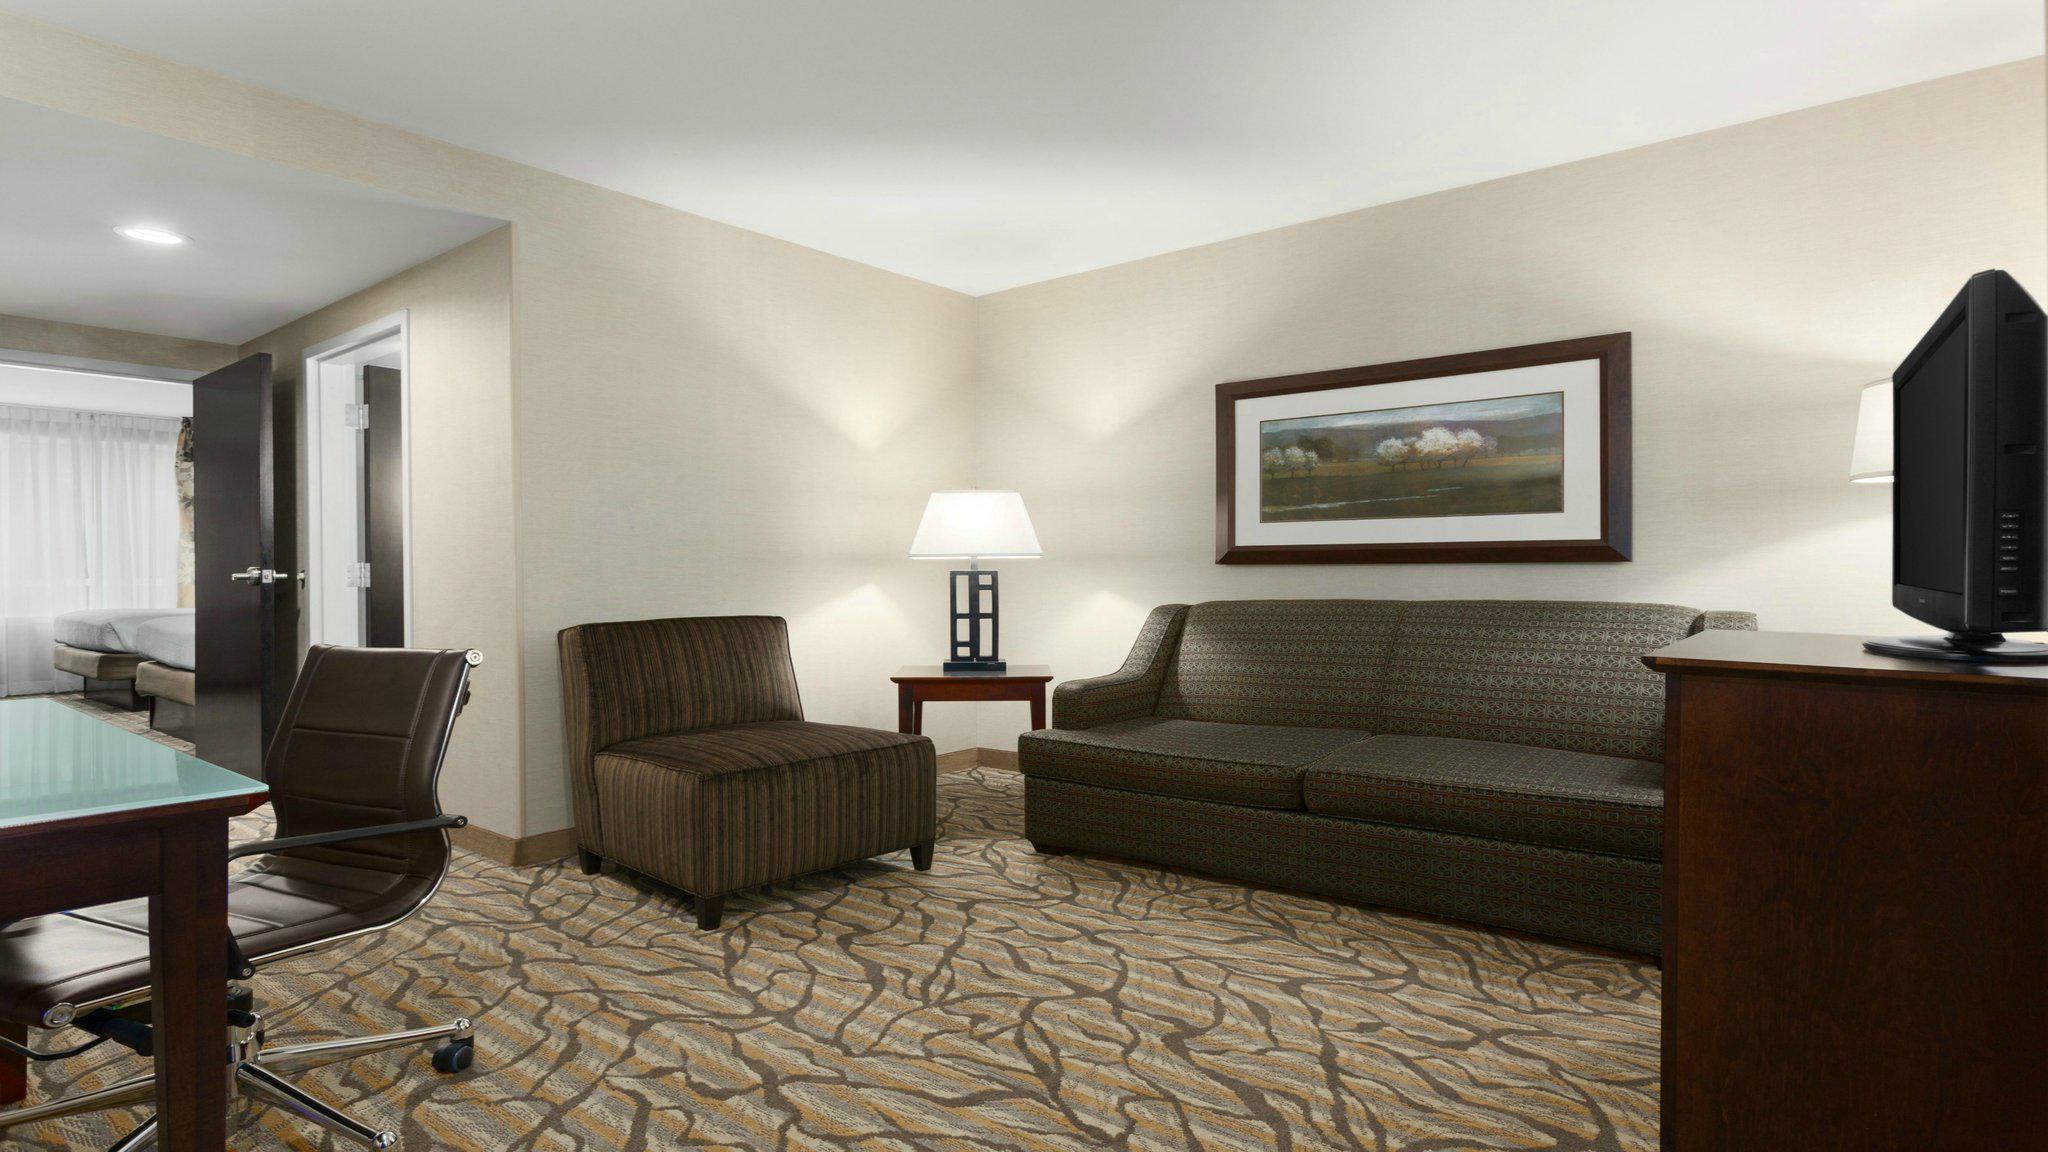 Holiday Inn & Suites Williamsburg-Historic Gateway Photo